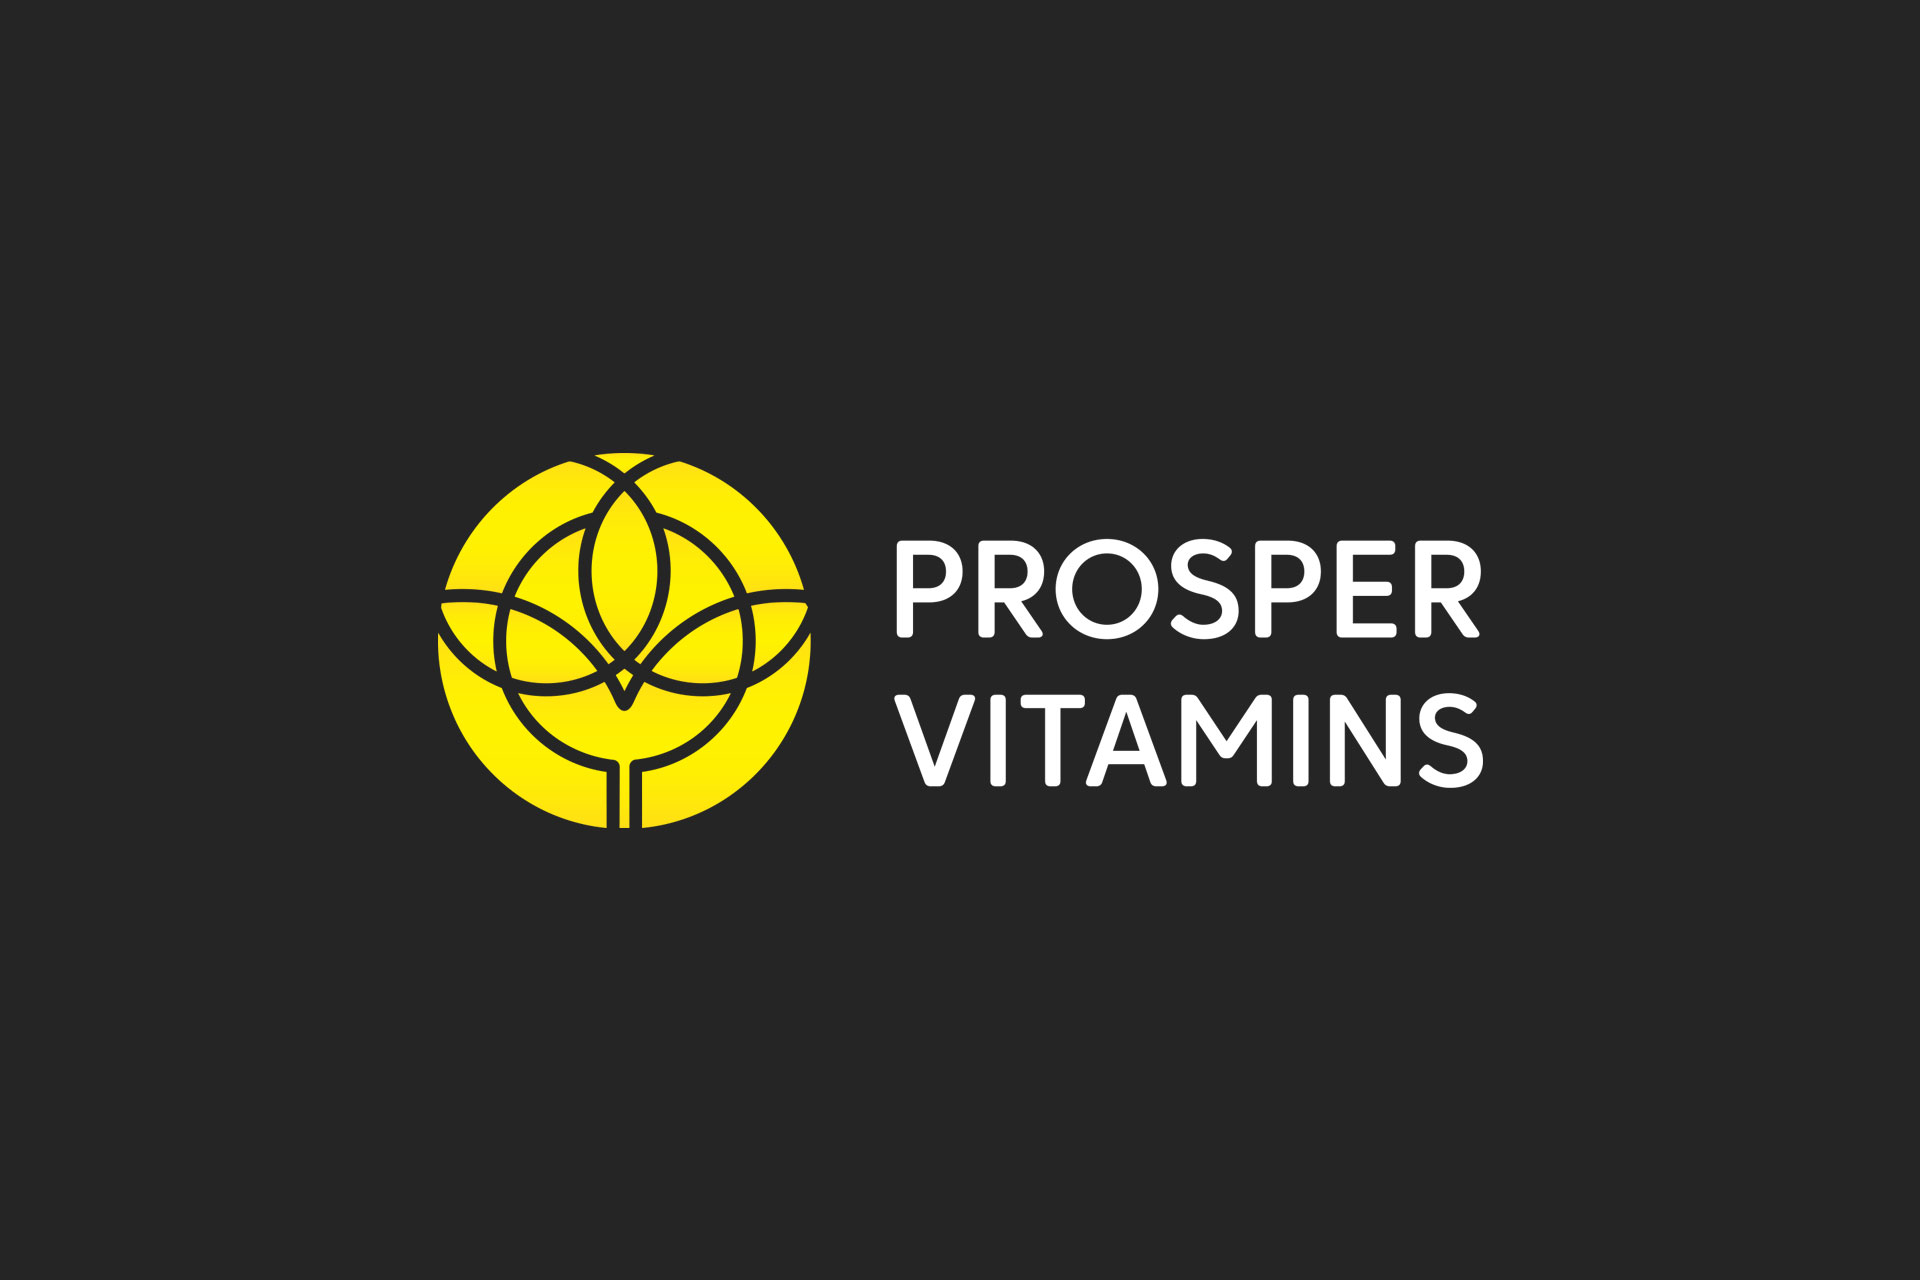 Prosper Vitamins - Abundance in Health is a Wealthy Life